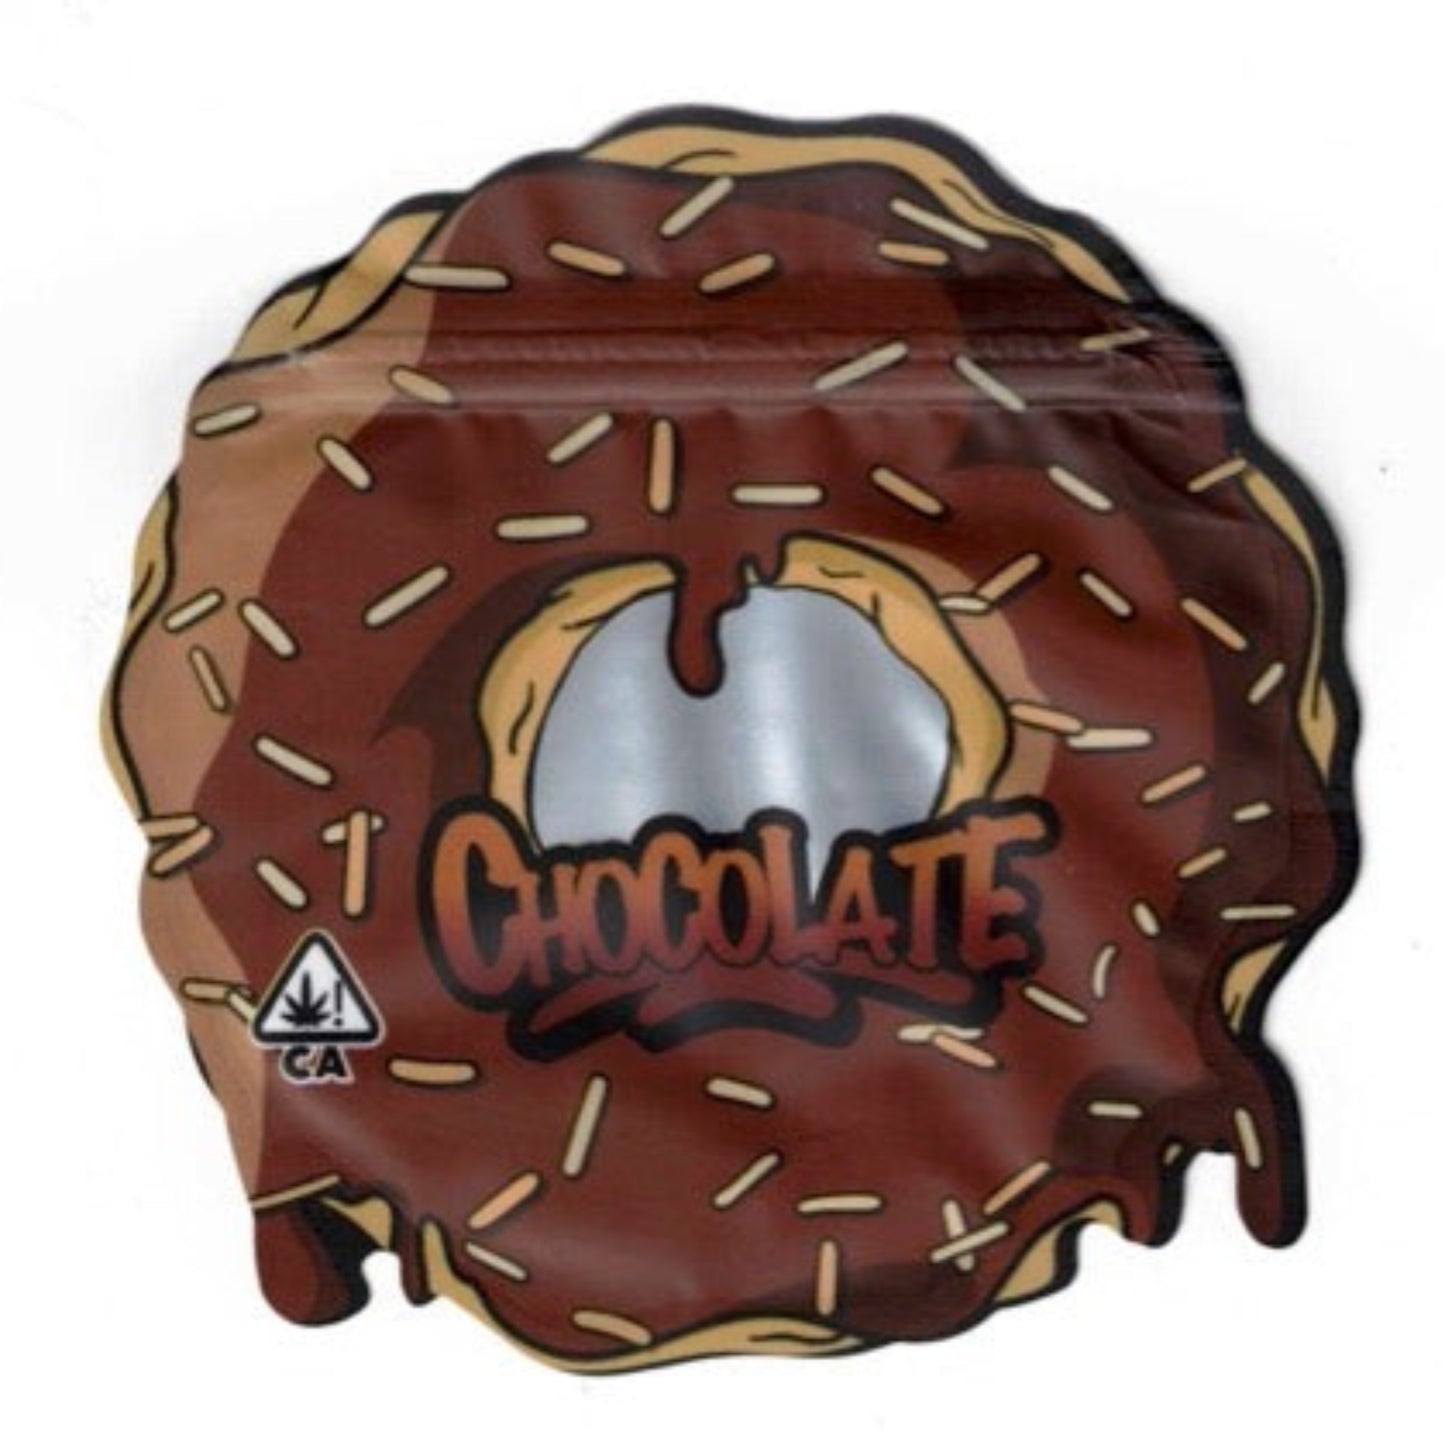 Chocolate 3.5G Mylar Bags